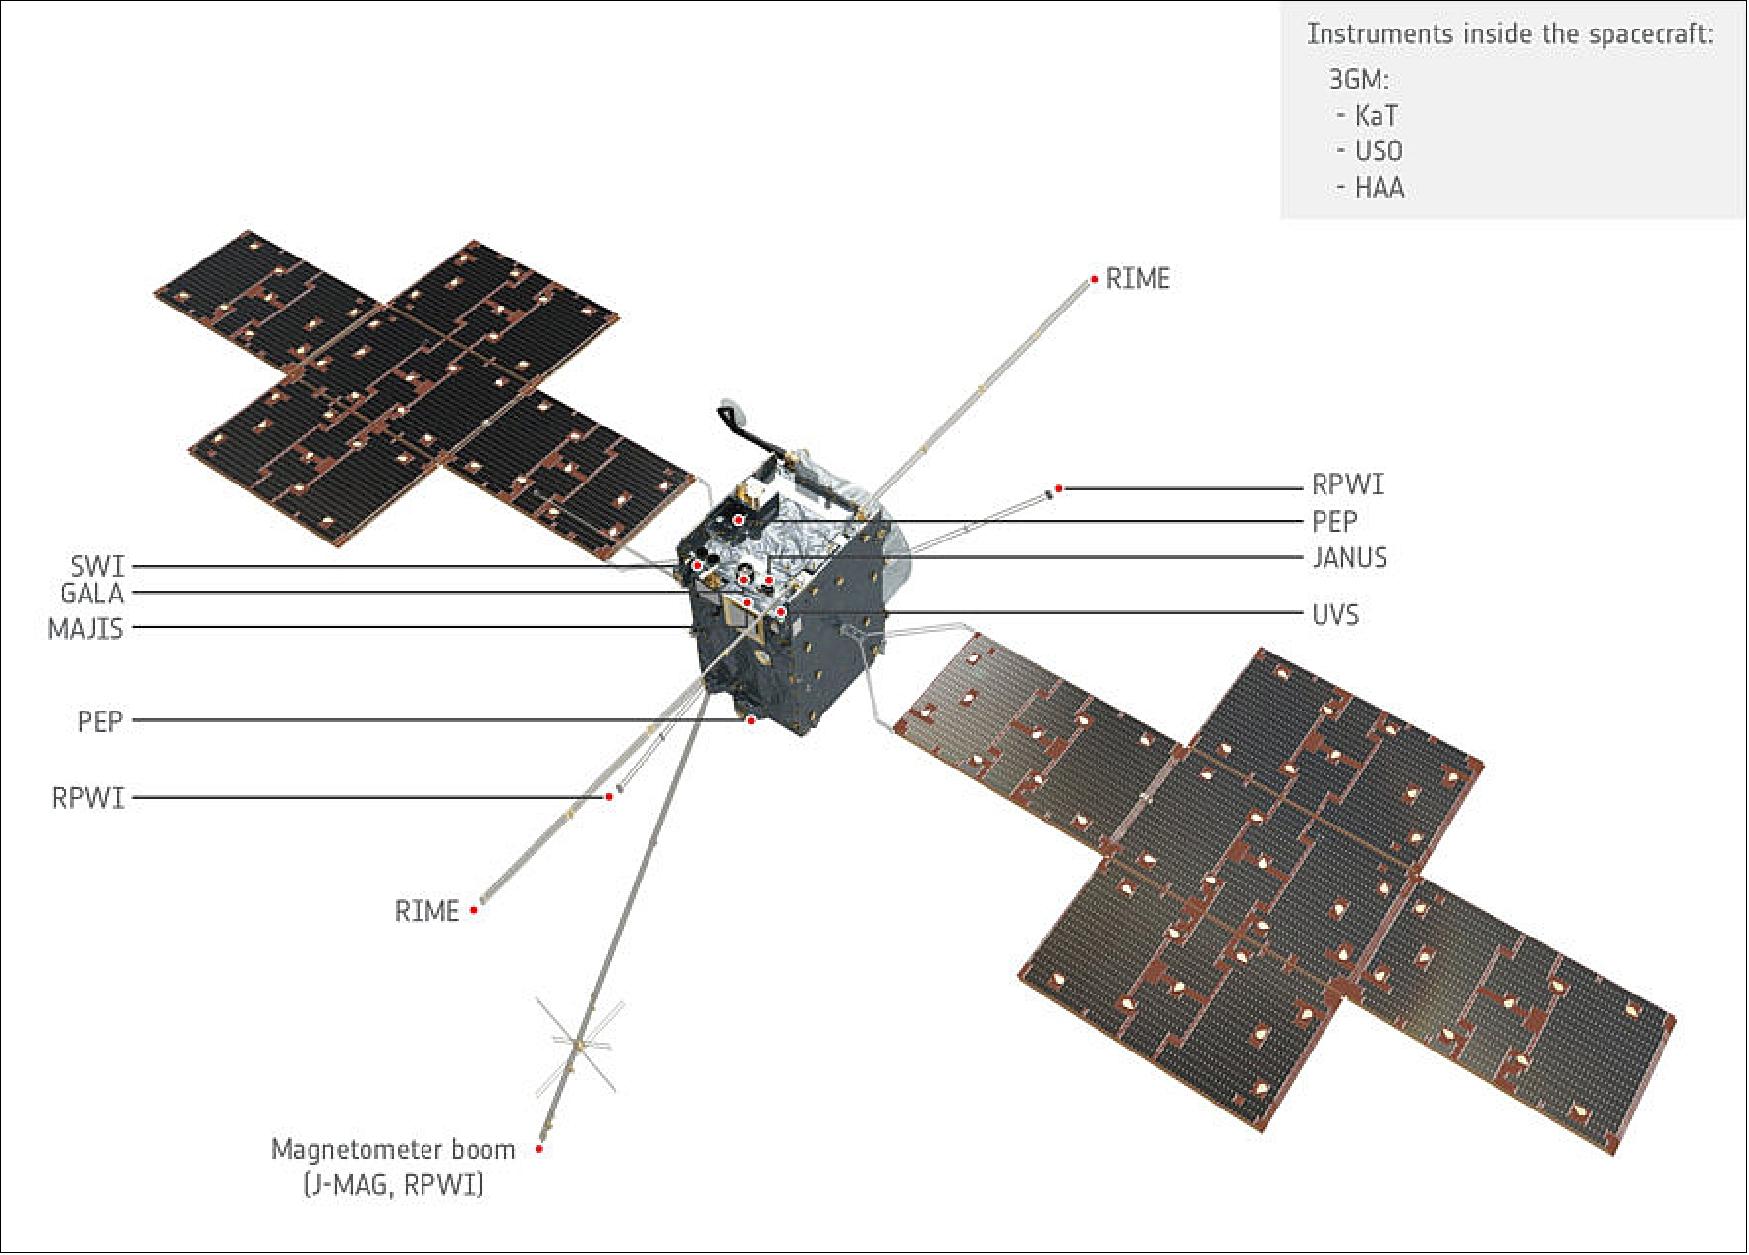 Figure 30: Overview of JUICE instruments (image credit: ESA/ATG medialab)